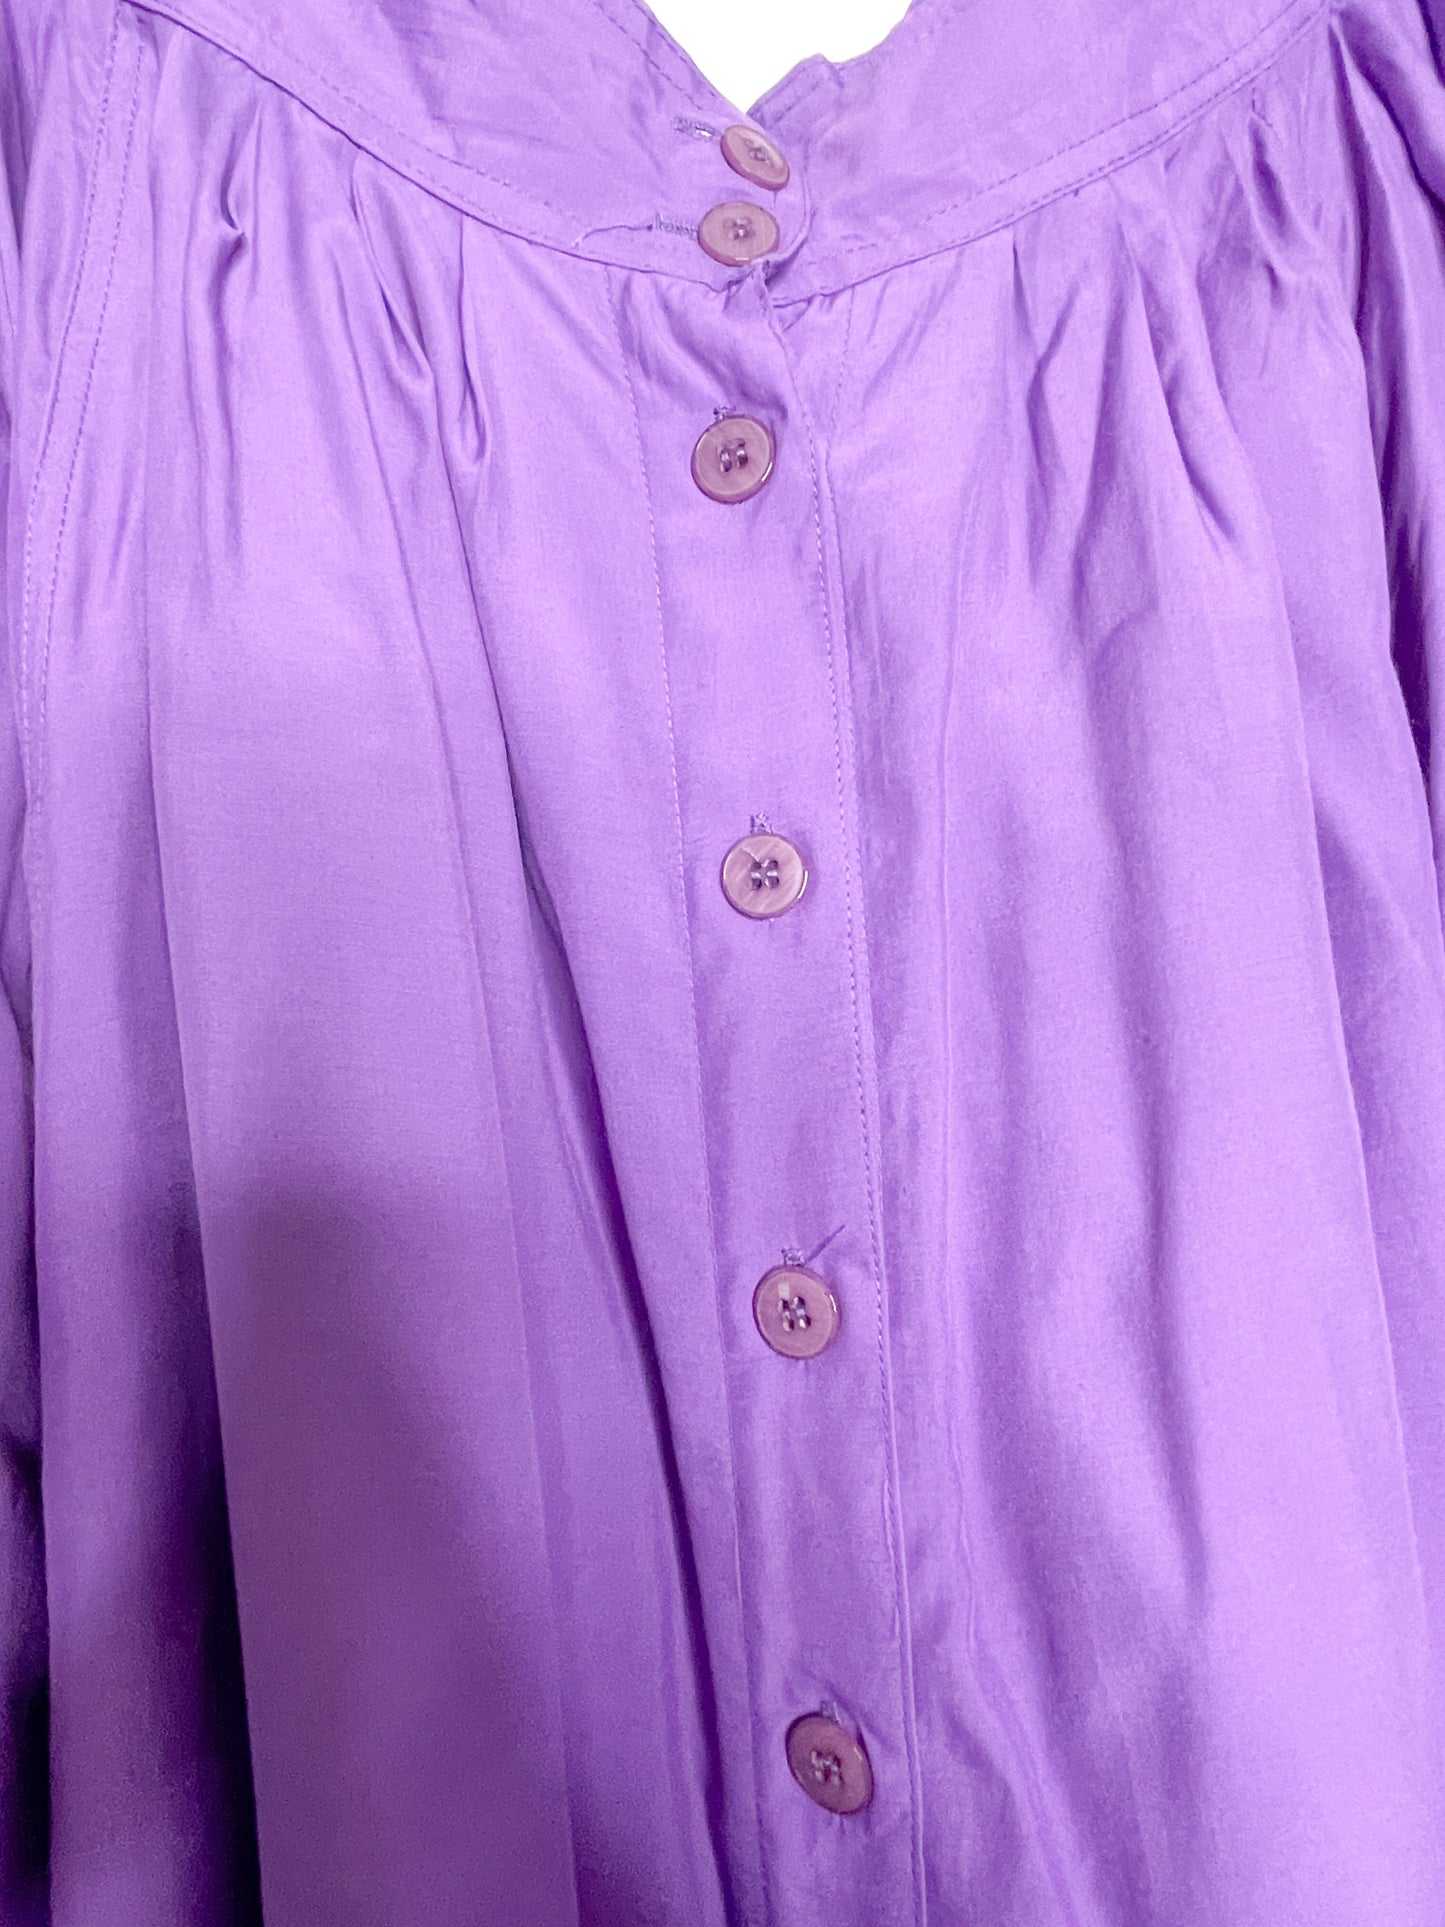 Vintage Tanjay Purple Skirt | Vintage Button Front Skirt | Plus size vintage skirt with pockets.